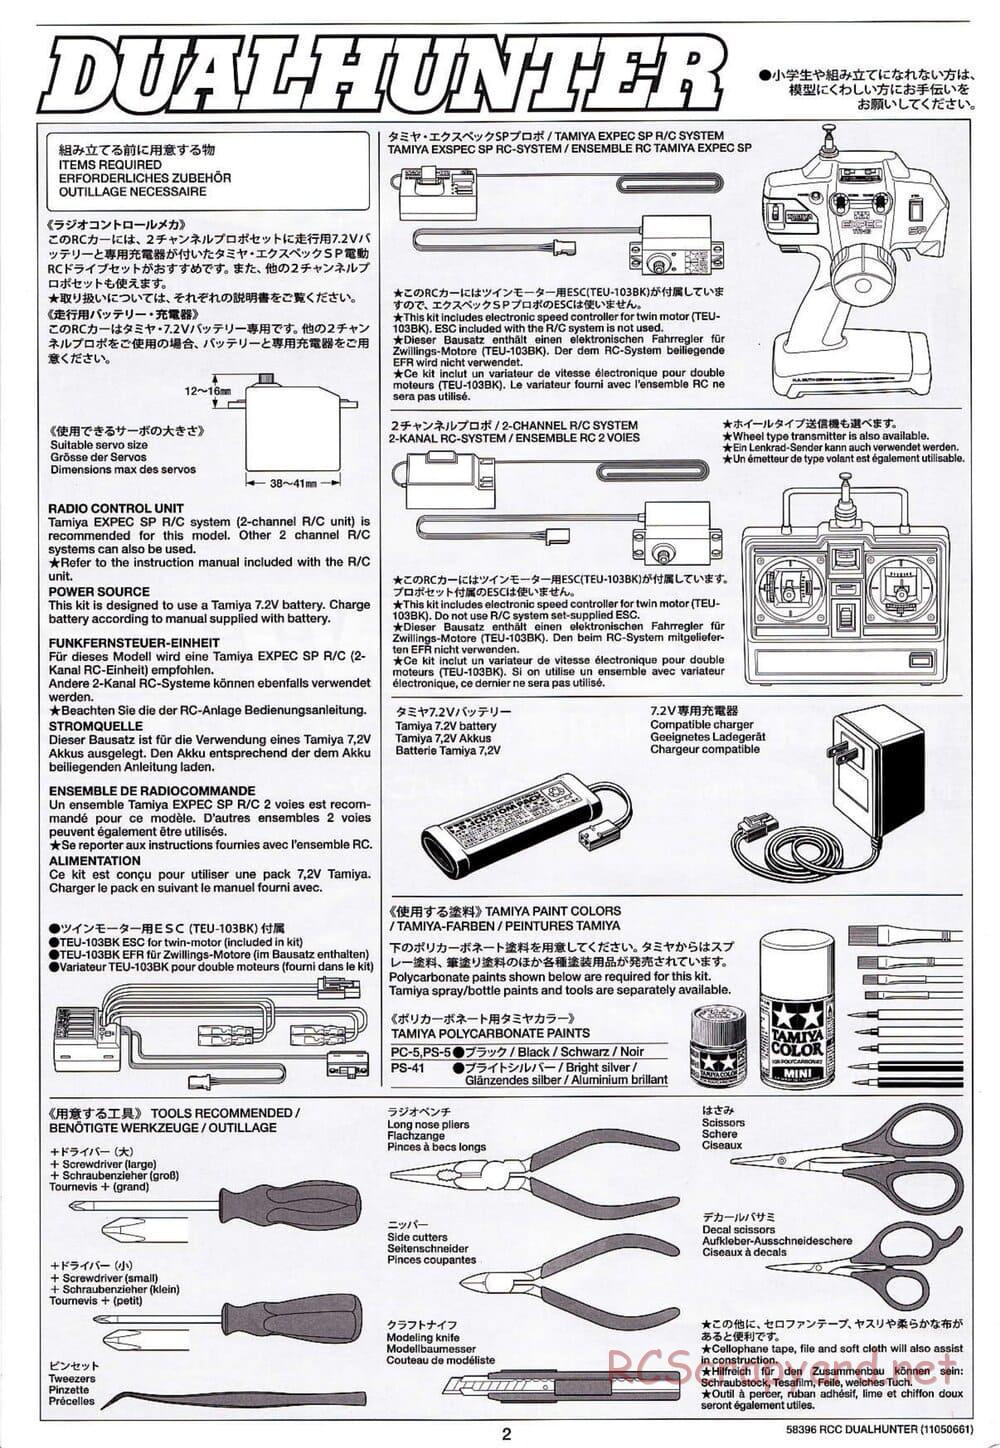 Tamiya - Dualhunter - WR-01 Chassis - Manual - Page 2